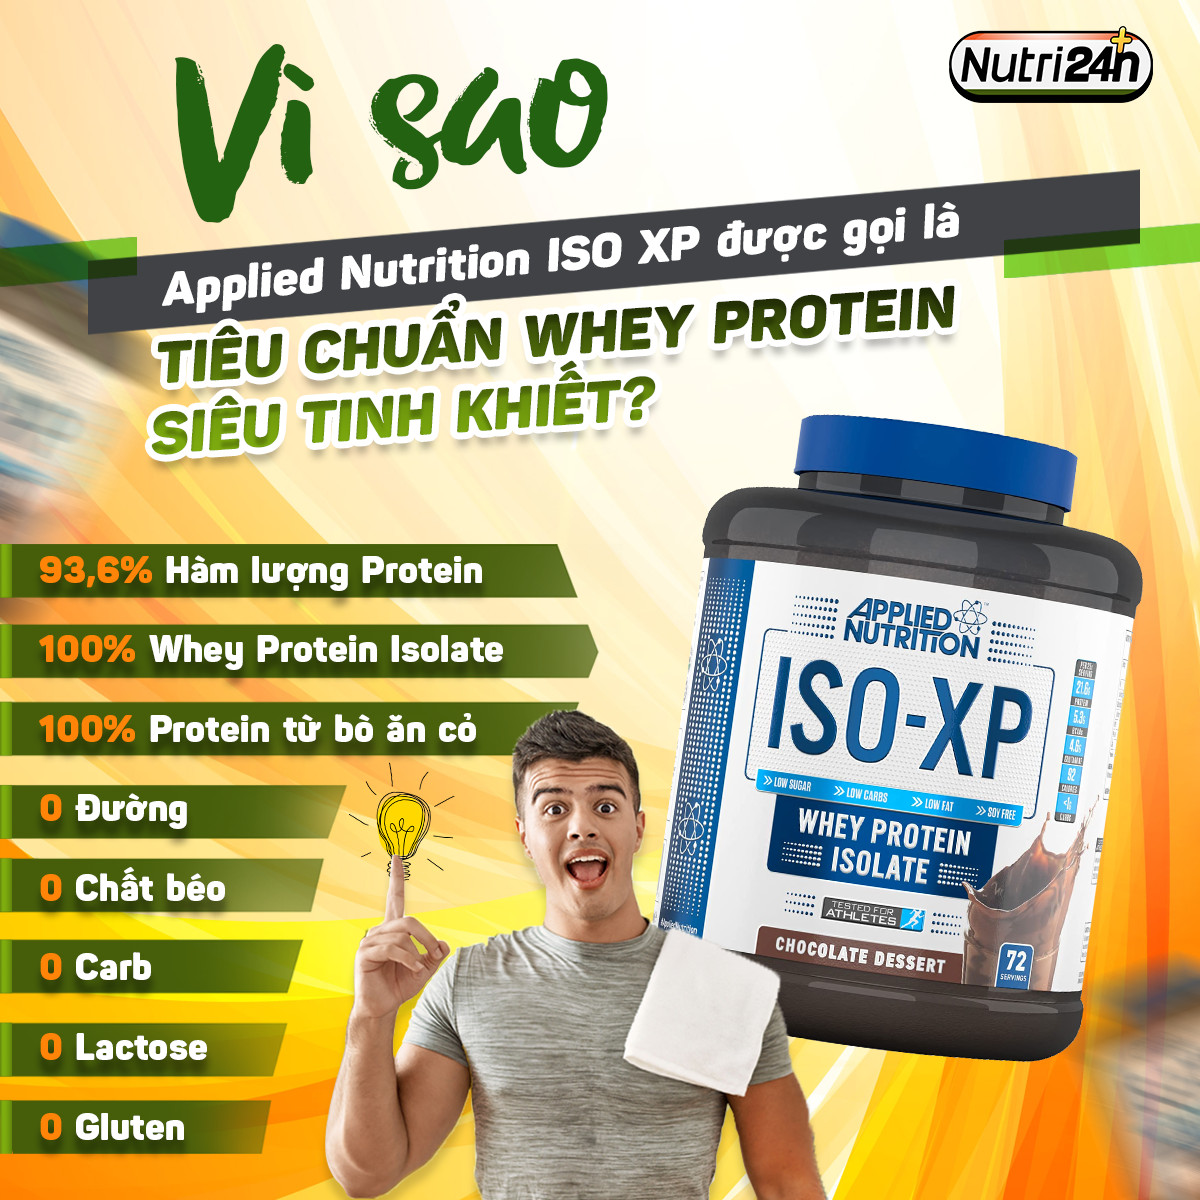 APPLIED NUTRITION ISO XP - TIÊU CHUẨN WHEY PROTEIN SIÊU TINH KHIẾT